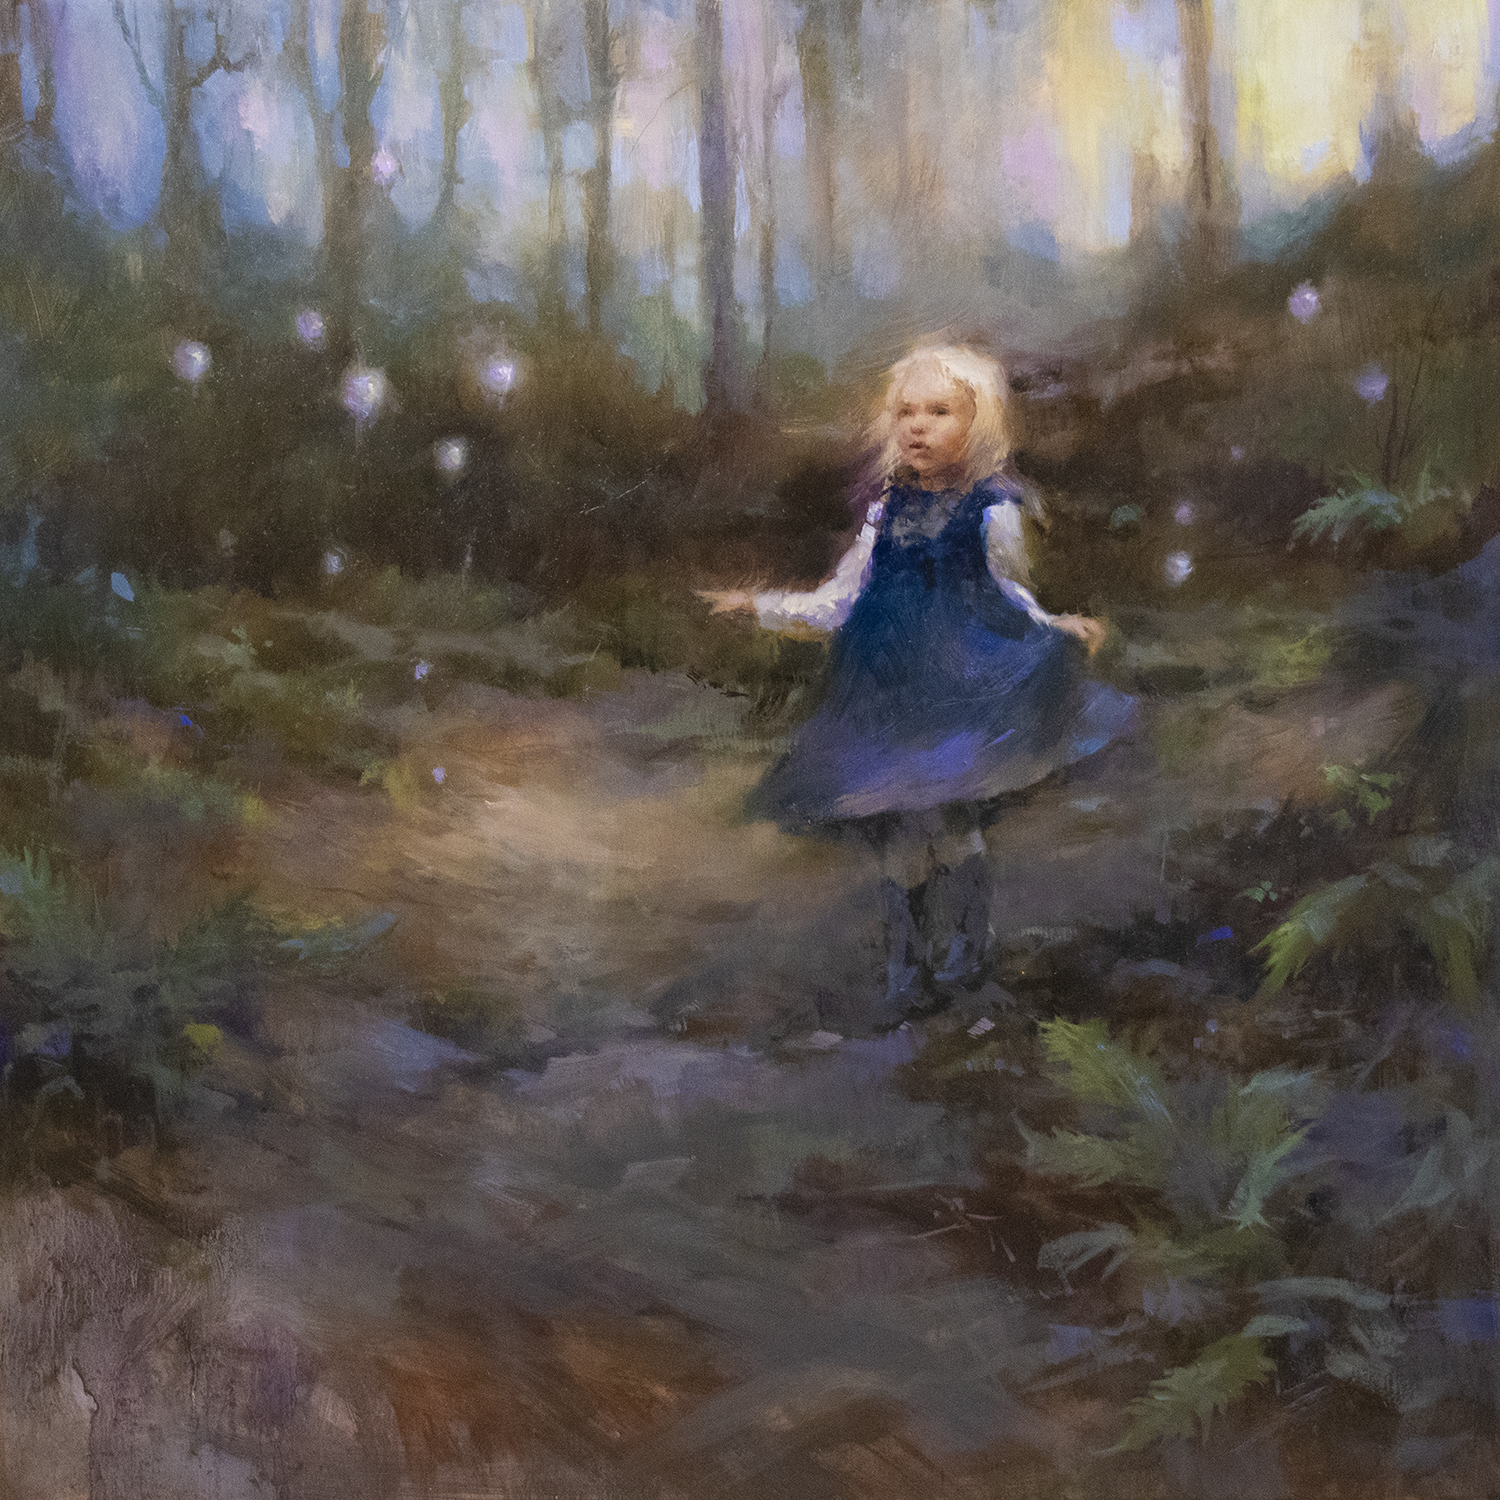 "Where Fairies Dwell" by Kathie Wheeler